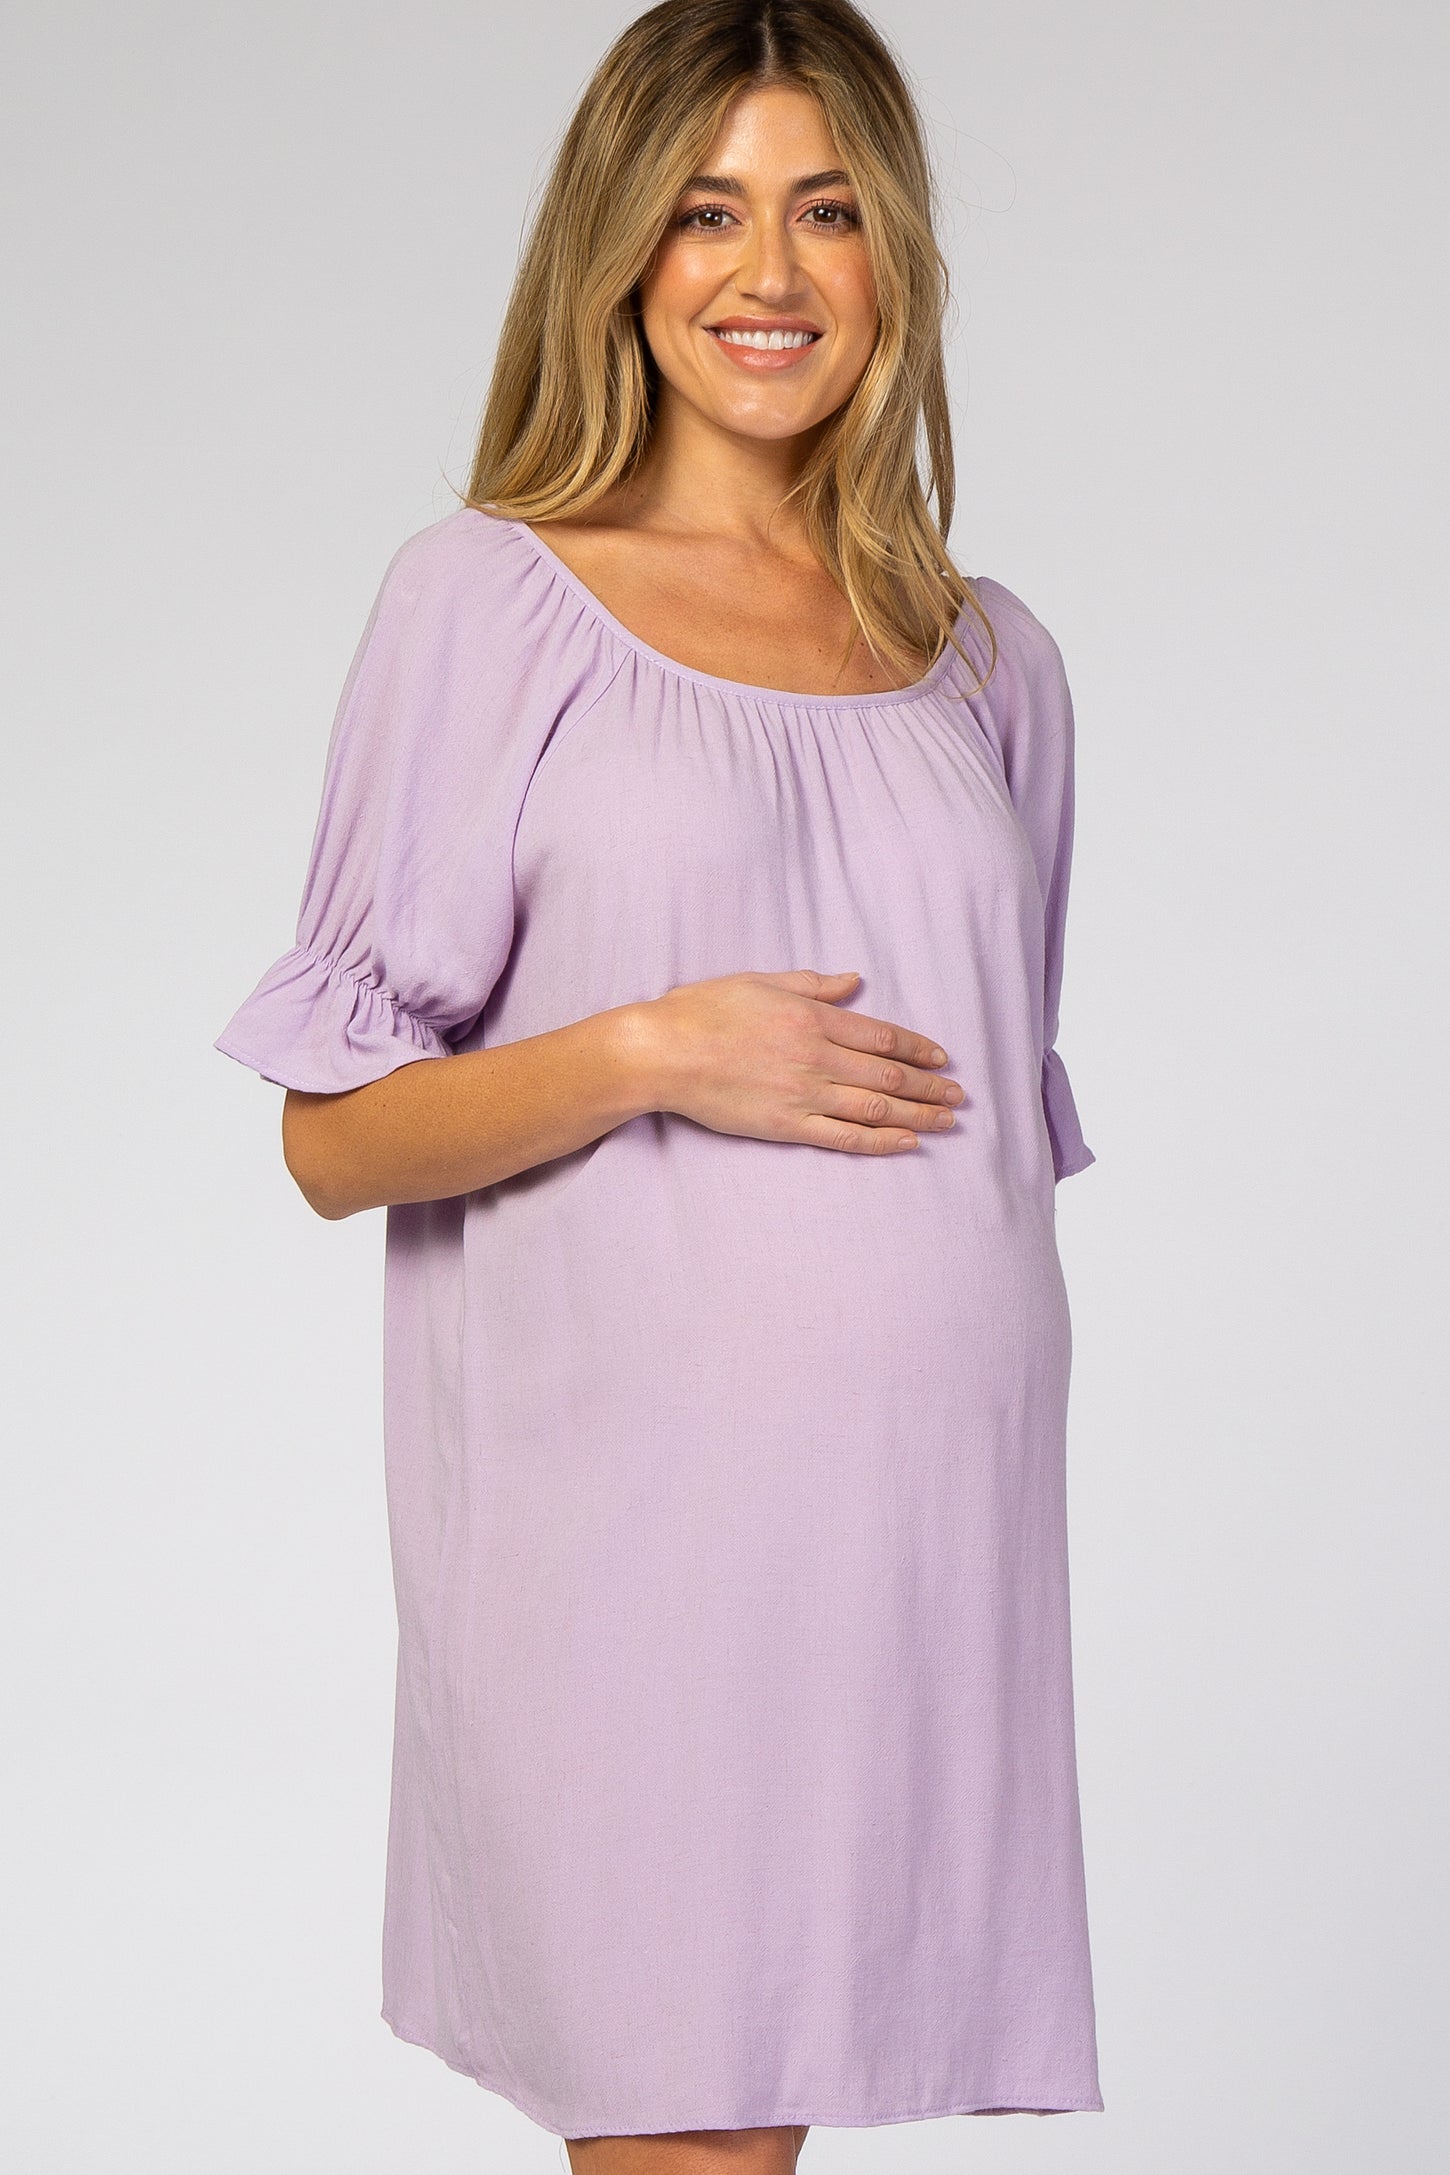 Lavender Knot Back Short Sleeve Maternity Dress